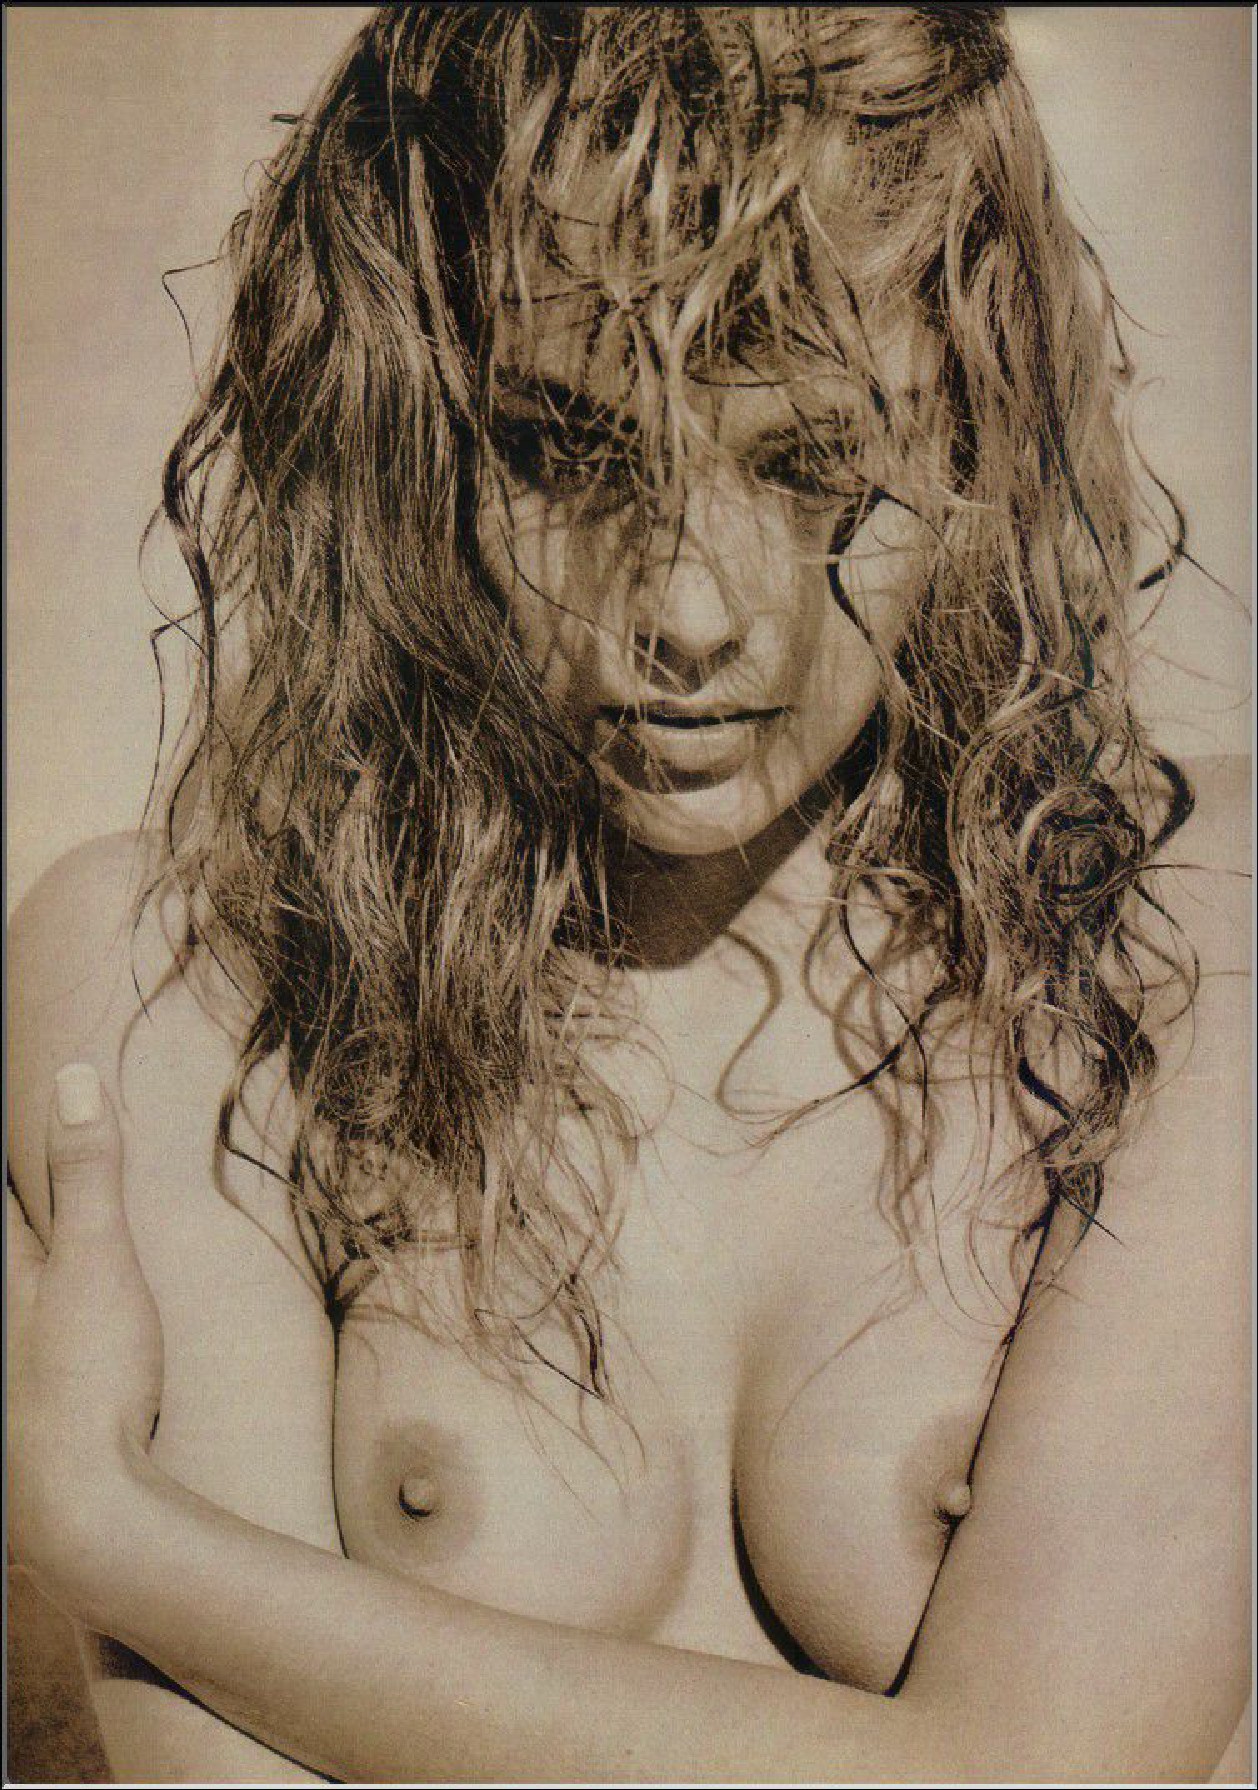 Sharon Stone Playboy